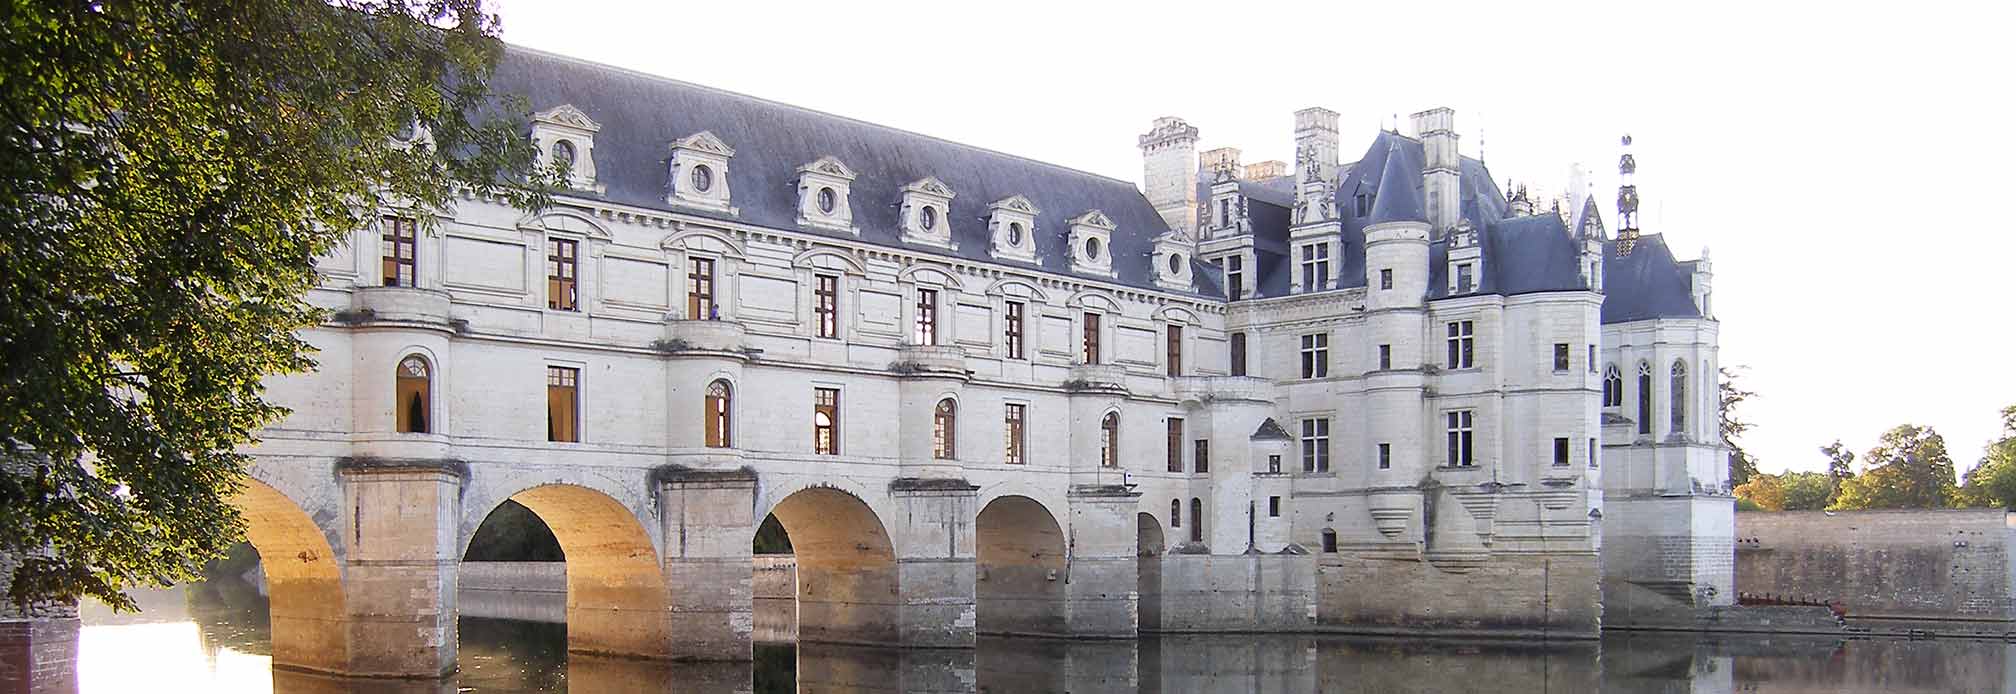 Château de Chenonceau, France. Photo by Gilles Pesenti via Wikimedia